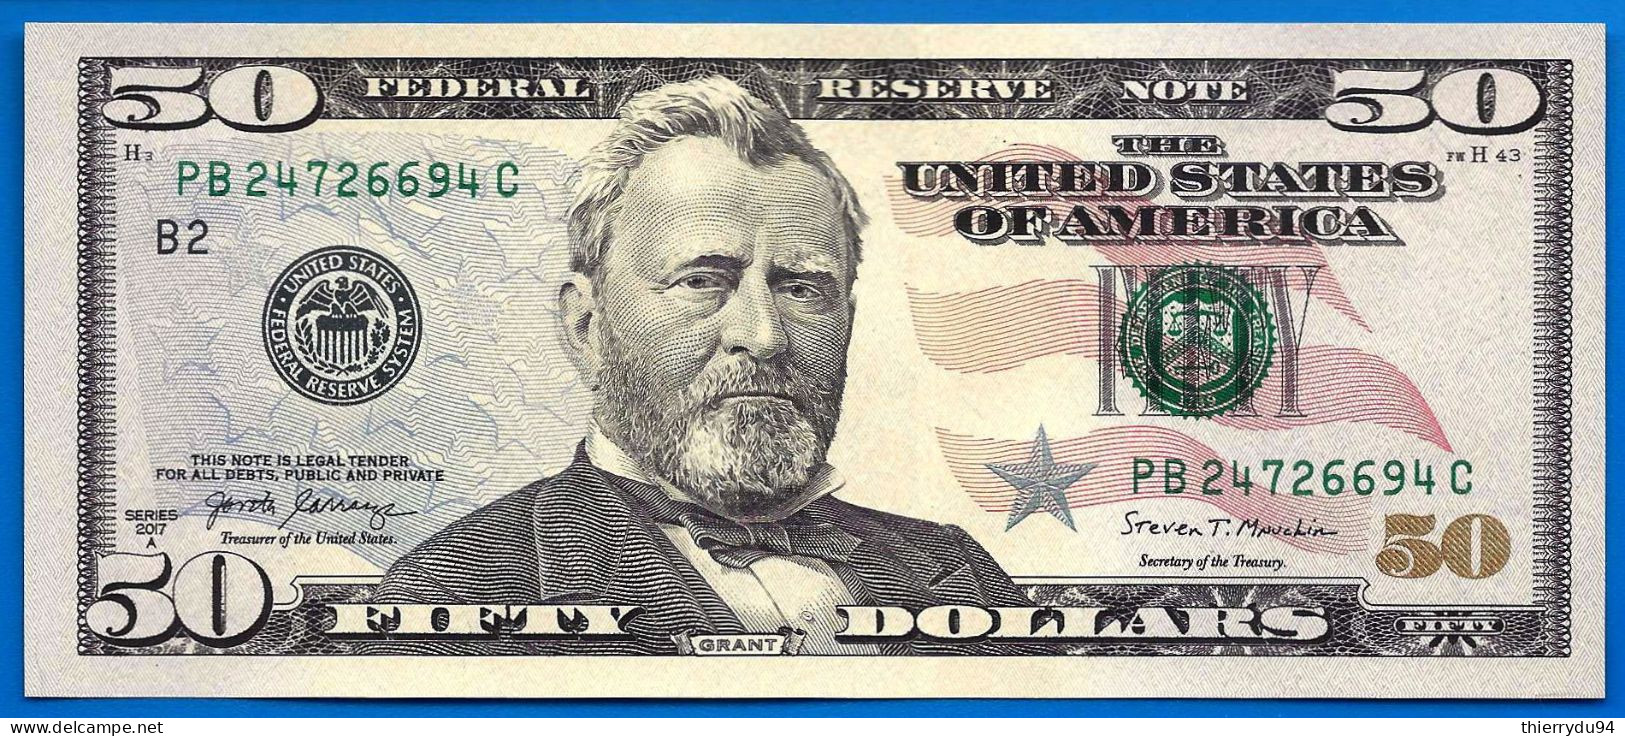 USA 50 Dollars 2017 A 2017A Mint Nerw York B2 Suffix C US Etats Unis United States Dollar Paypal Bitcoin - Bilglietti Della Riserva Federale (1928-...)